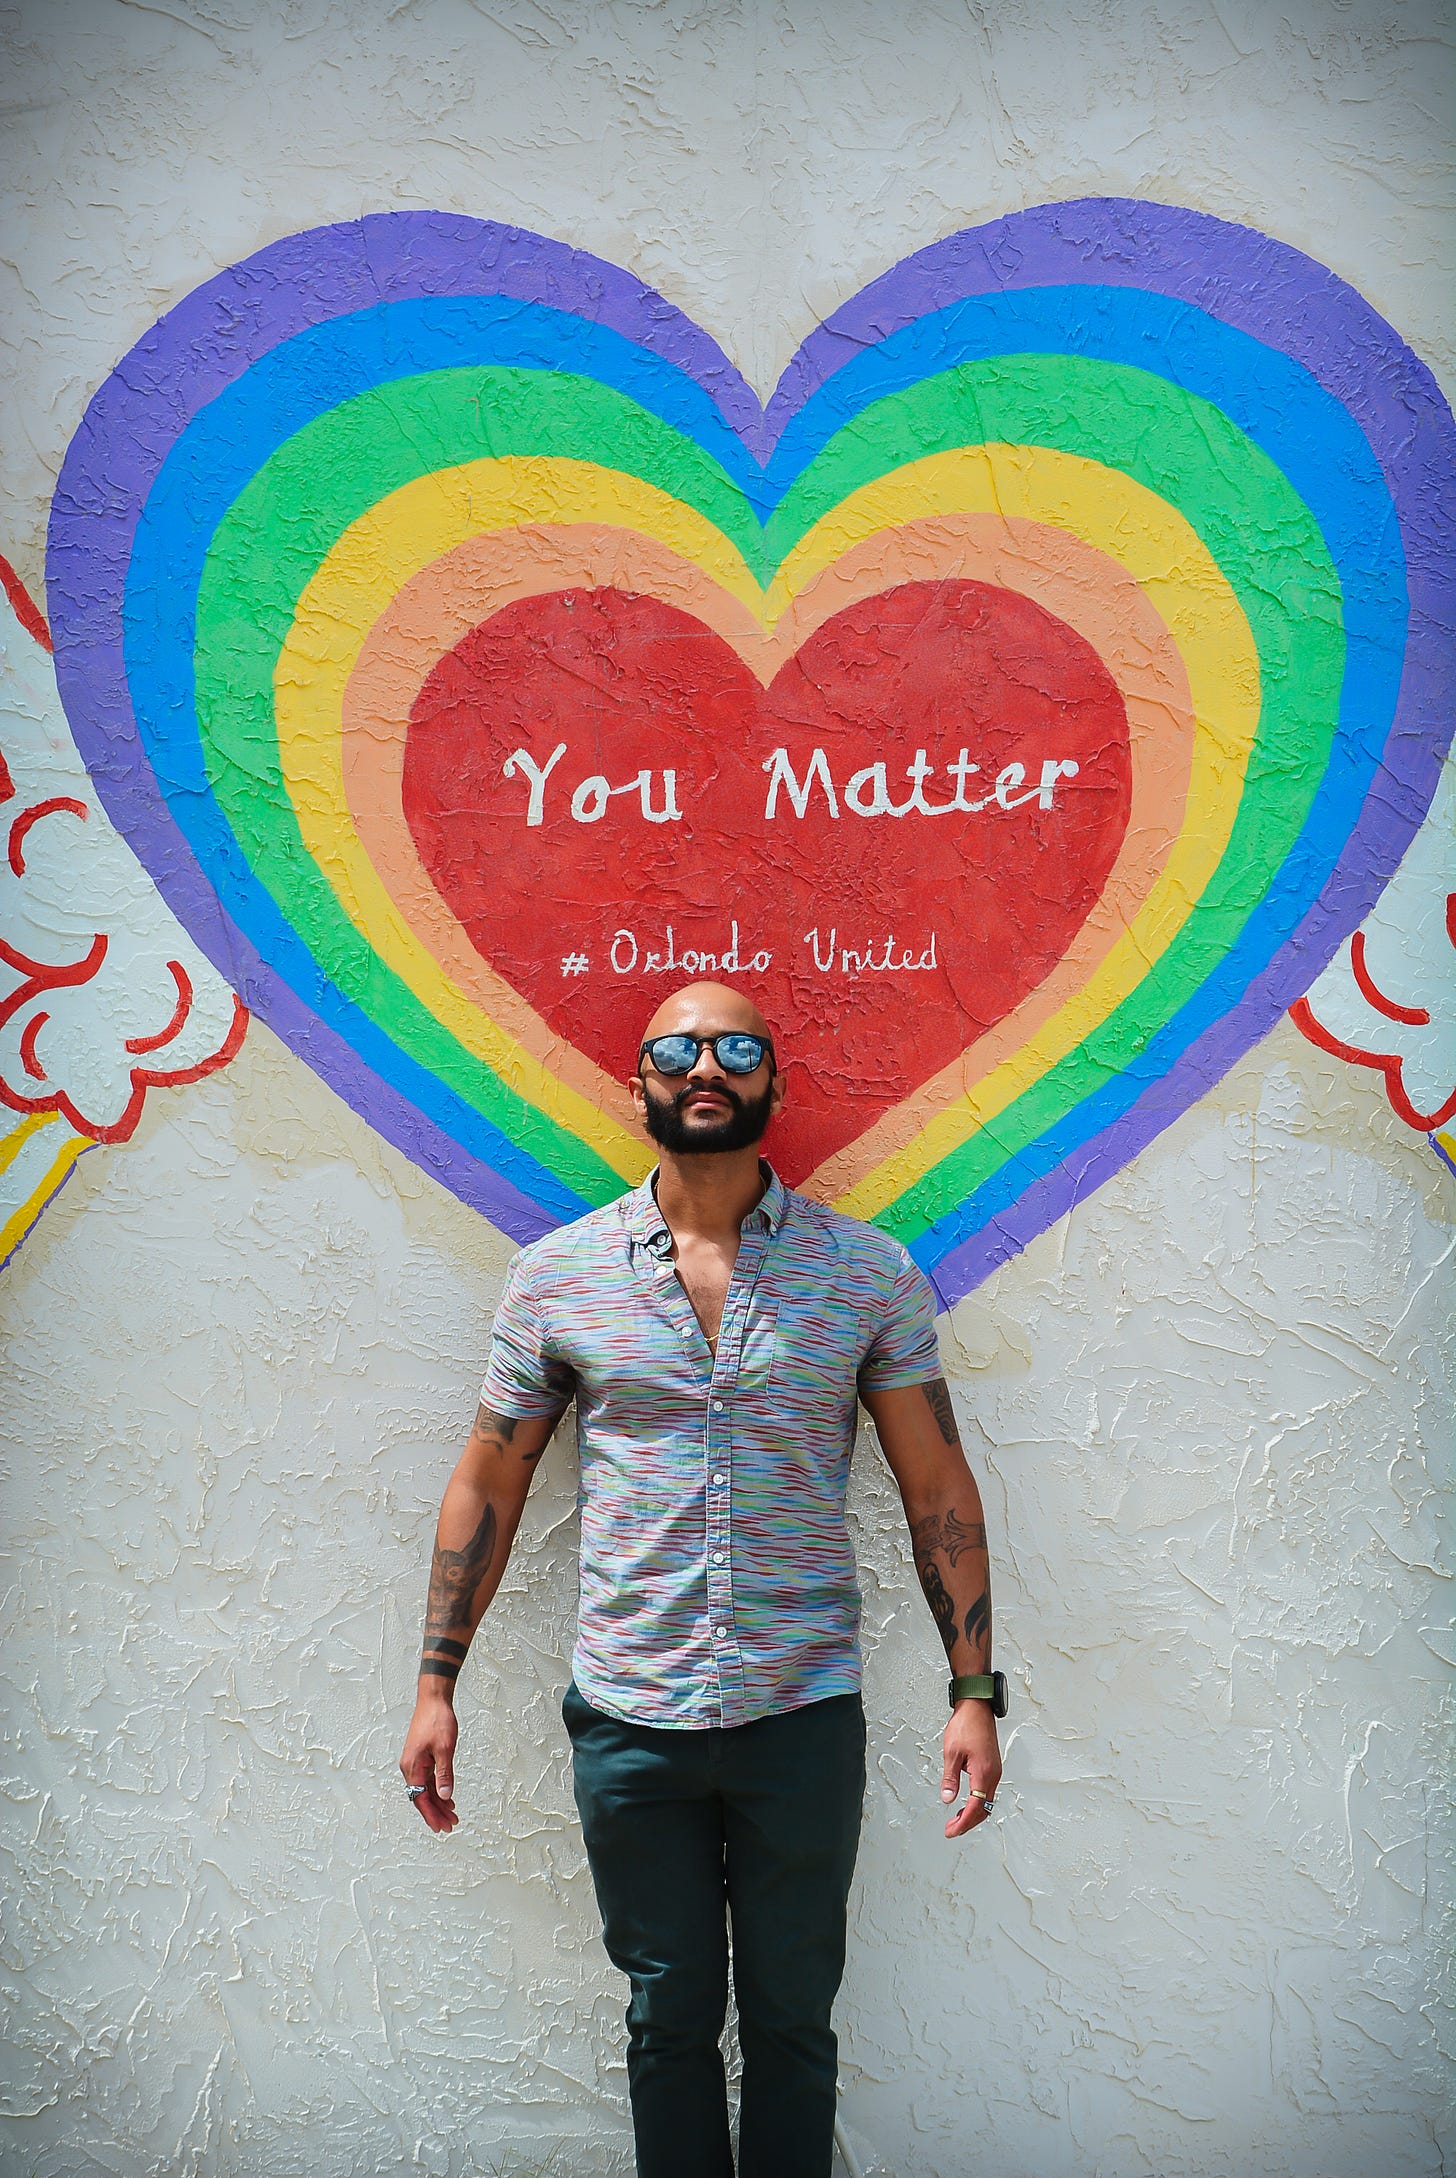 Jonattan standing in front of a #OrlandoUnited mural